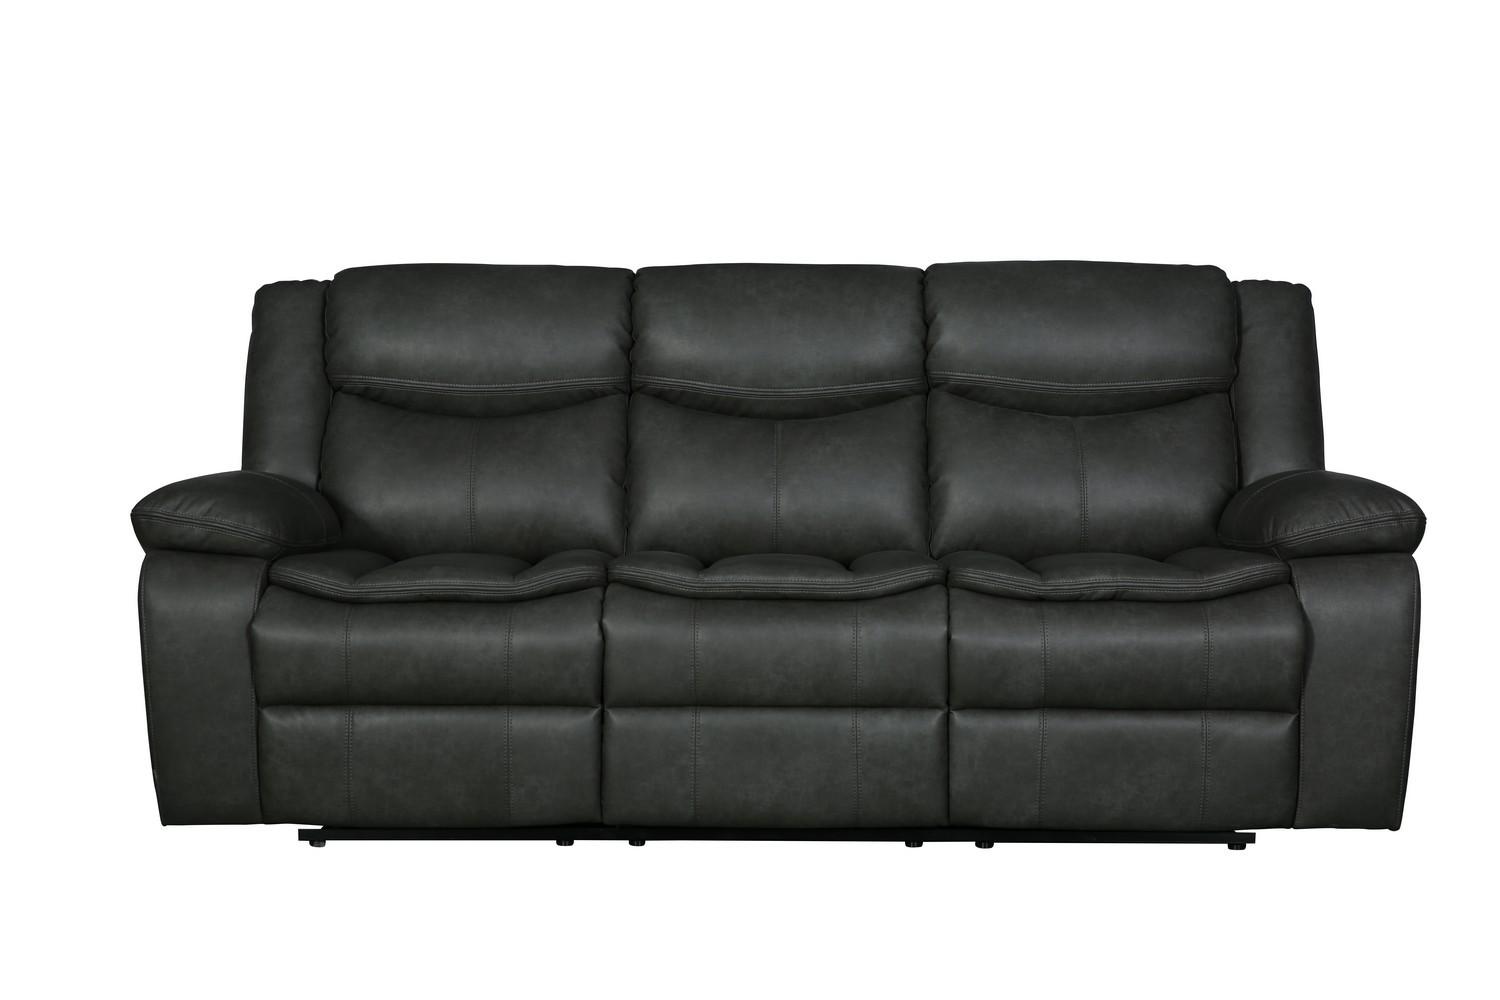 Contemporary Reclining Sofa 6967 Reclining Sofa 6967-GRAY-S 6967-GRAY-S in Gray leather Air